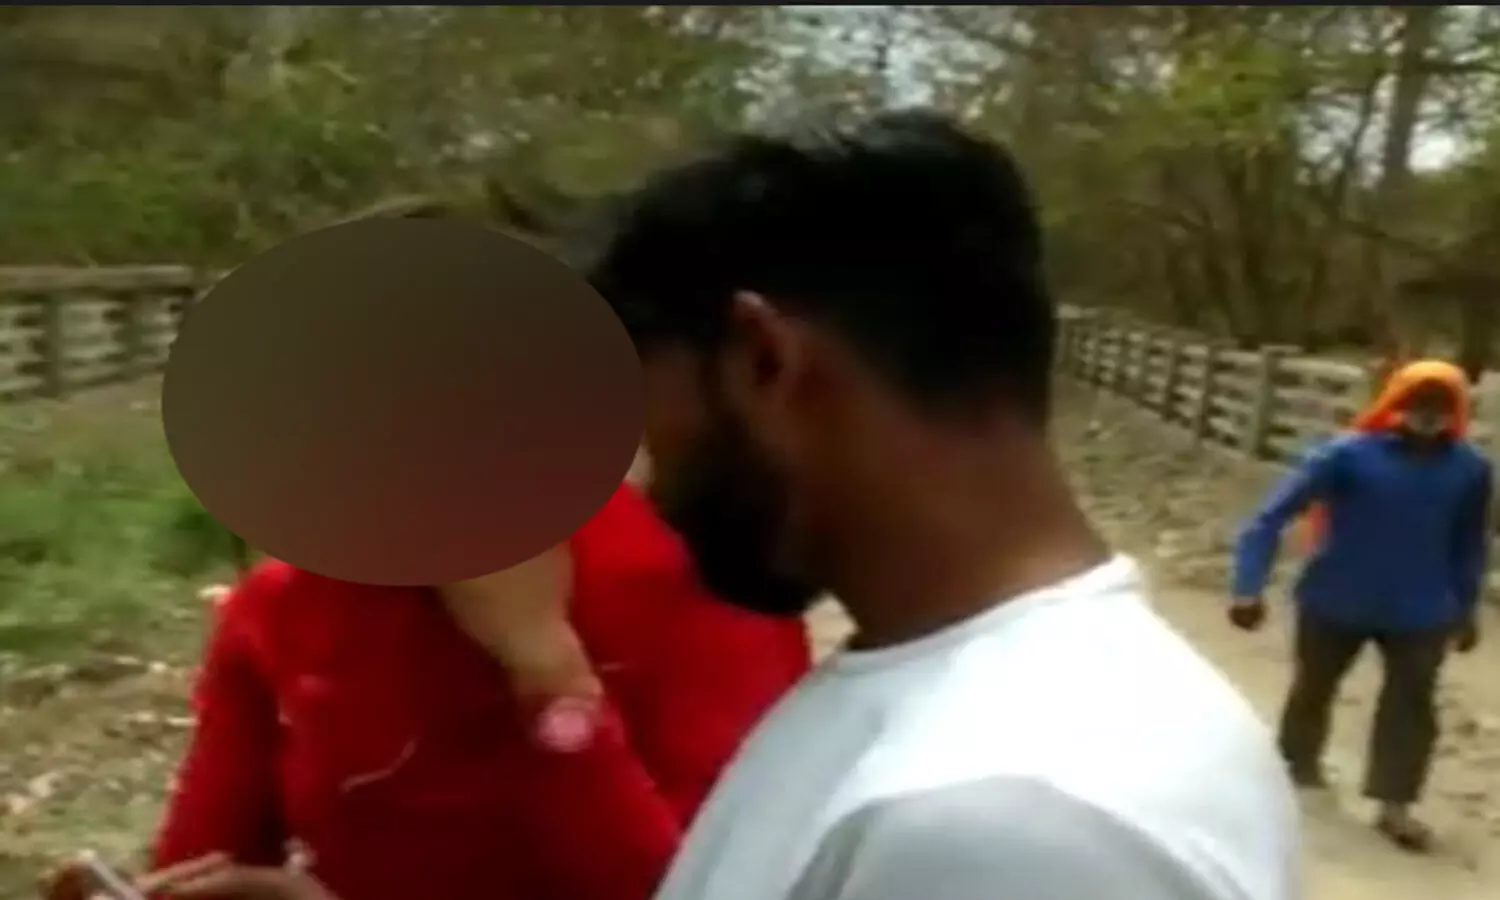 Bijnor Video of molestation of girl by miscreants goes viral